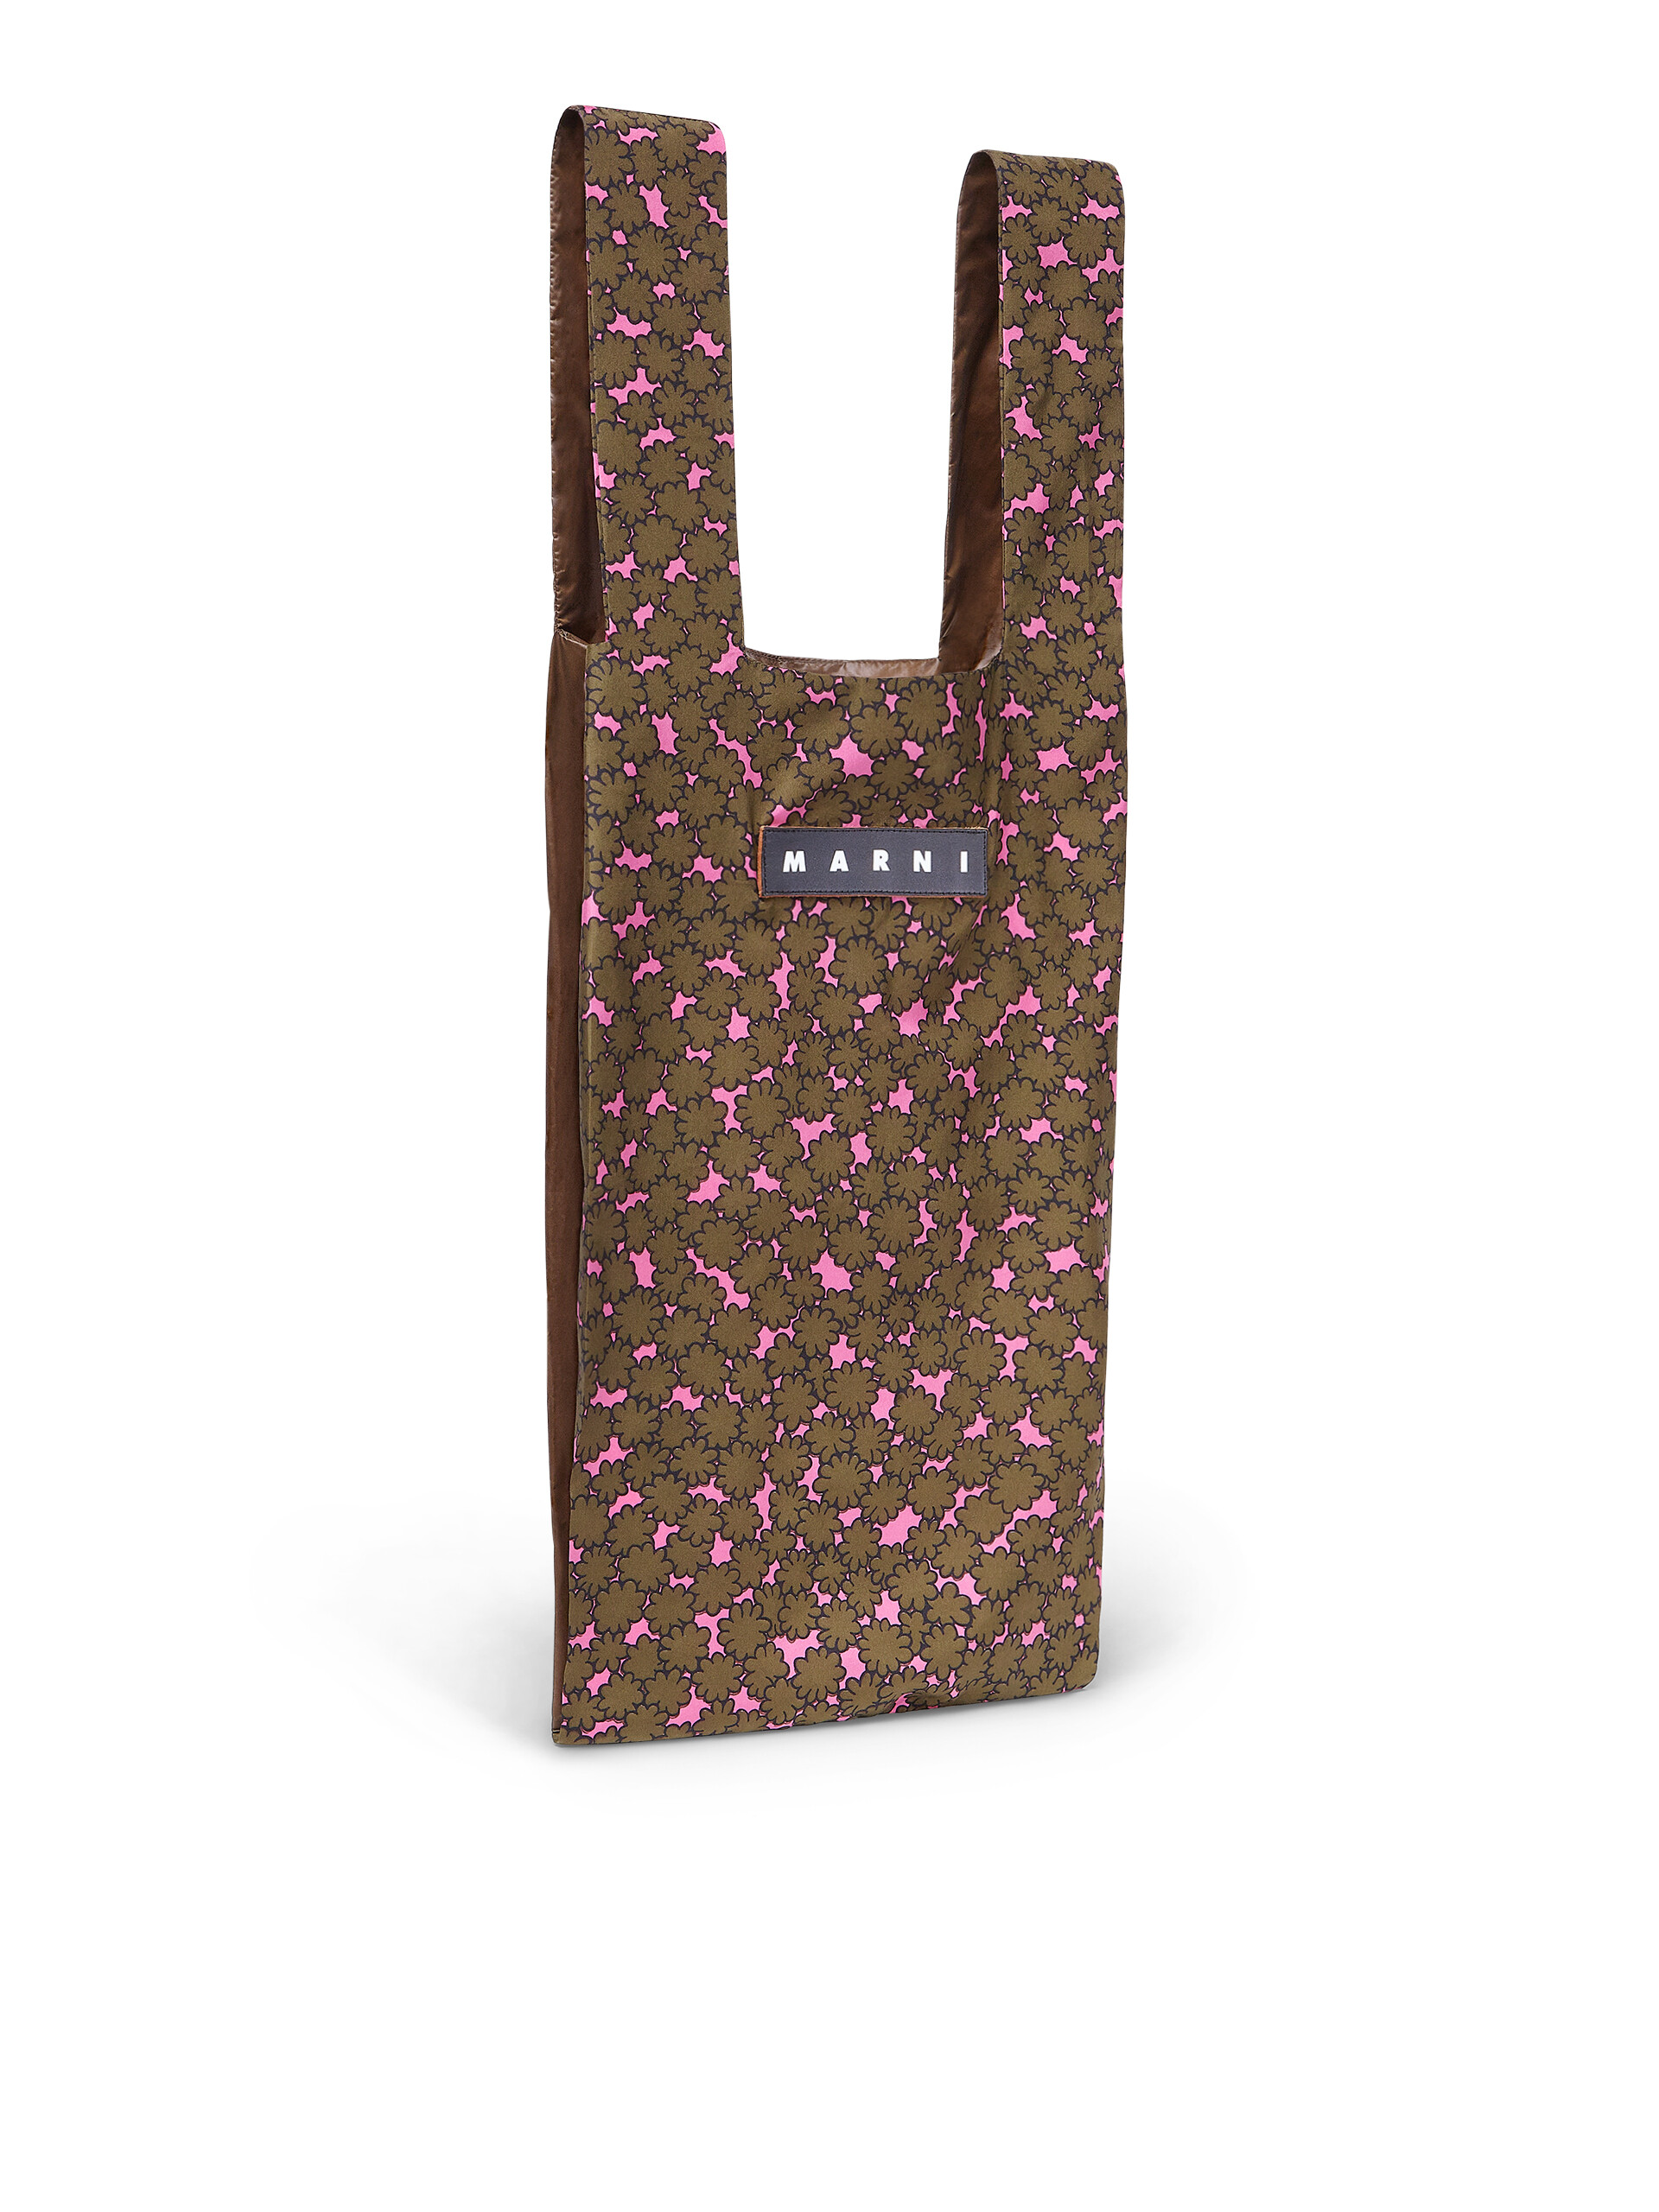 MARNI MARKET viscose shopping bag with floral print - Bags - Image 2